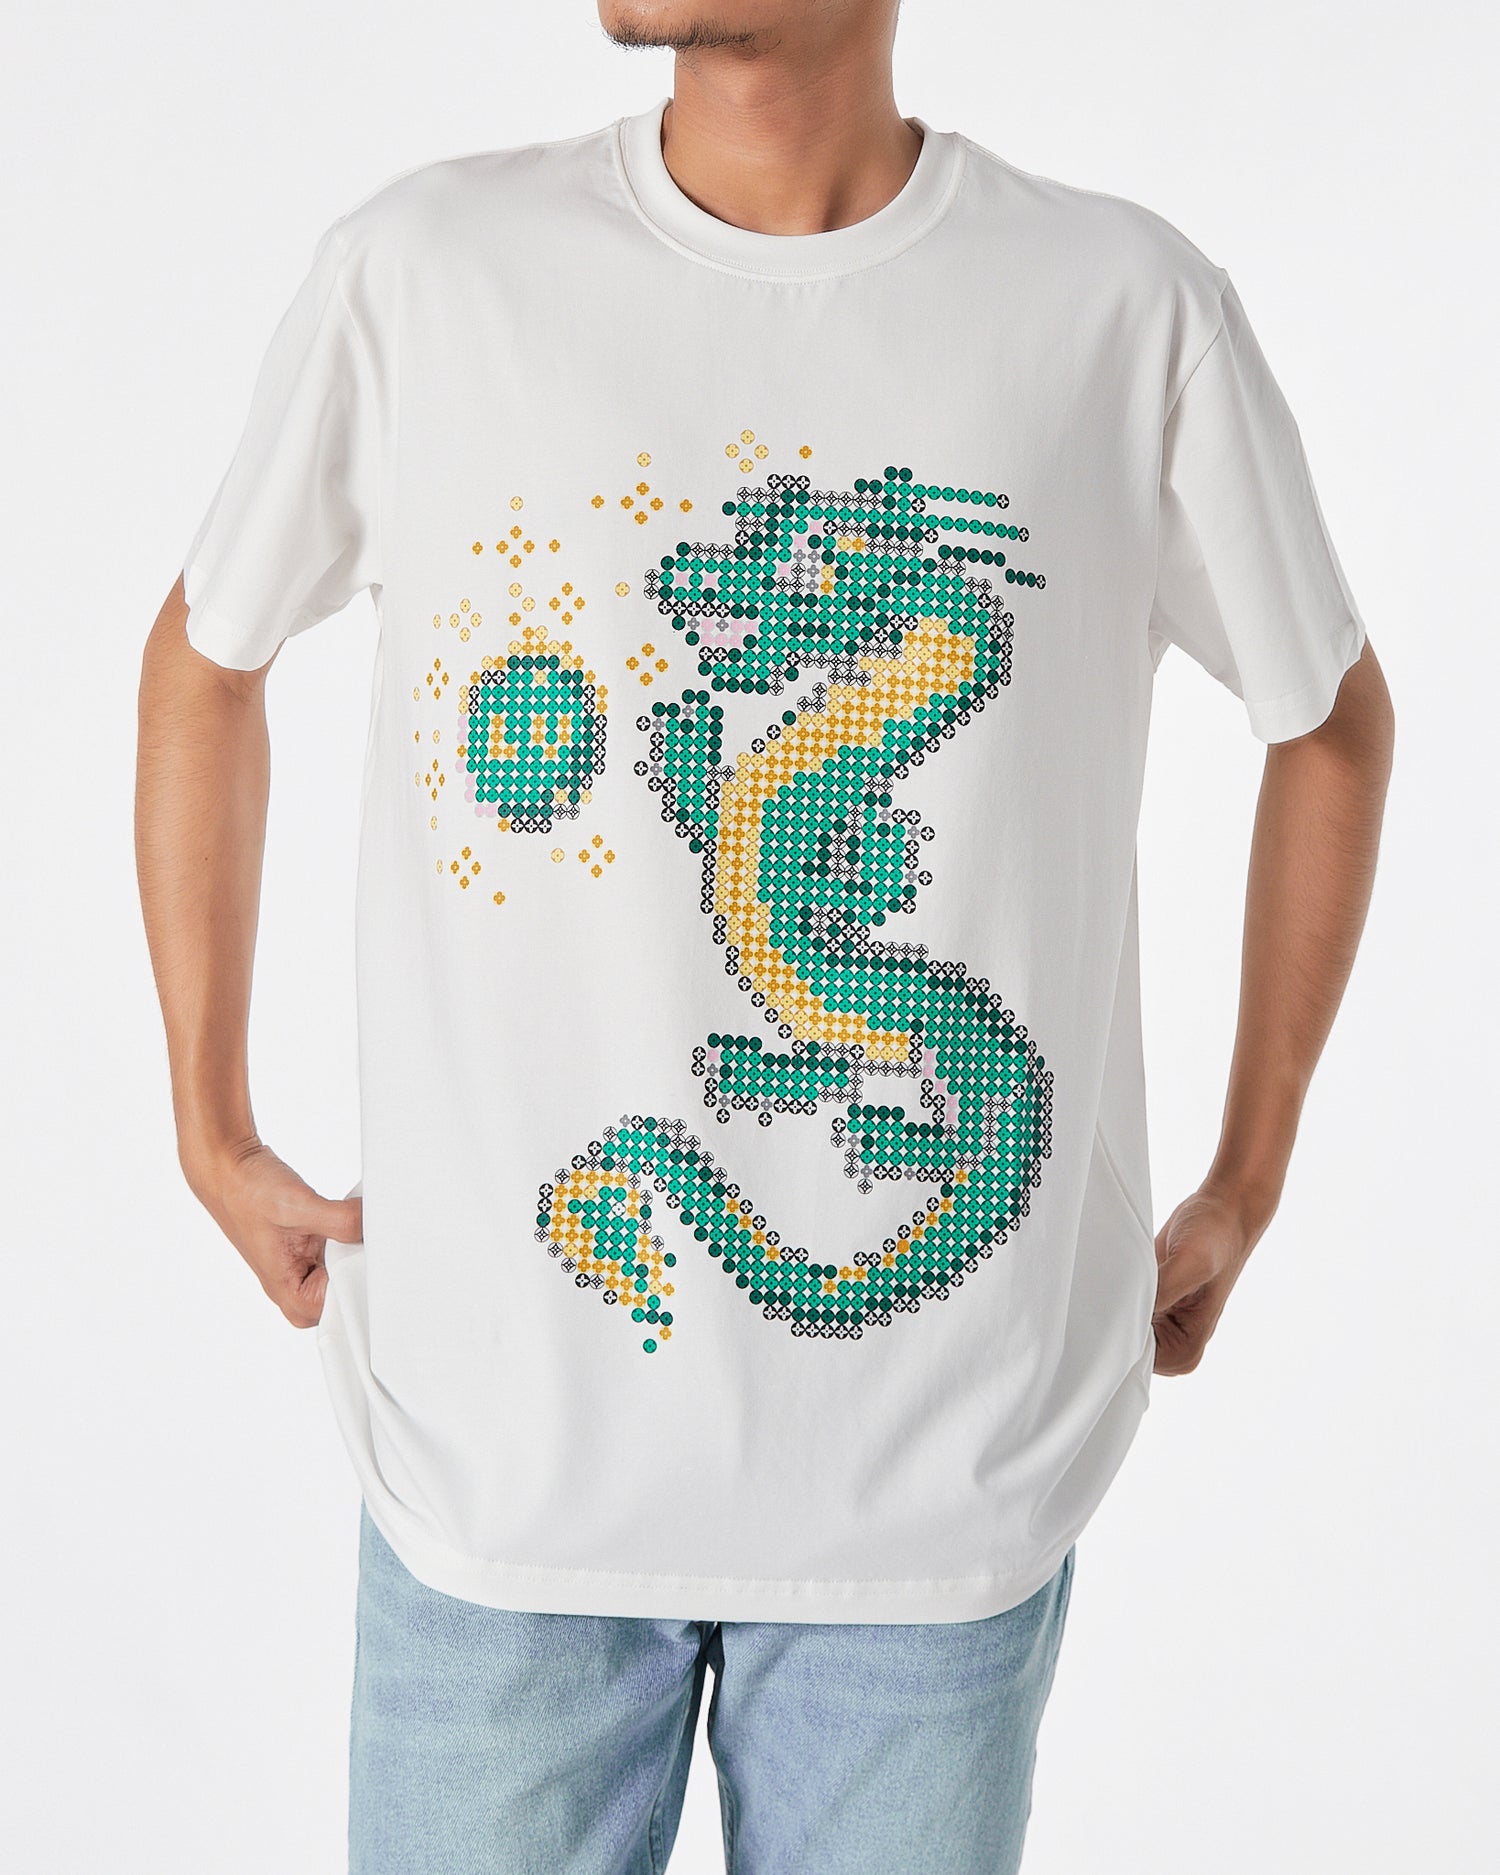 LV Dragon Printed Men White T-Shirt 16.90